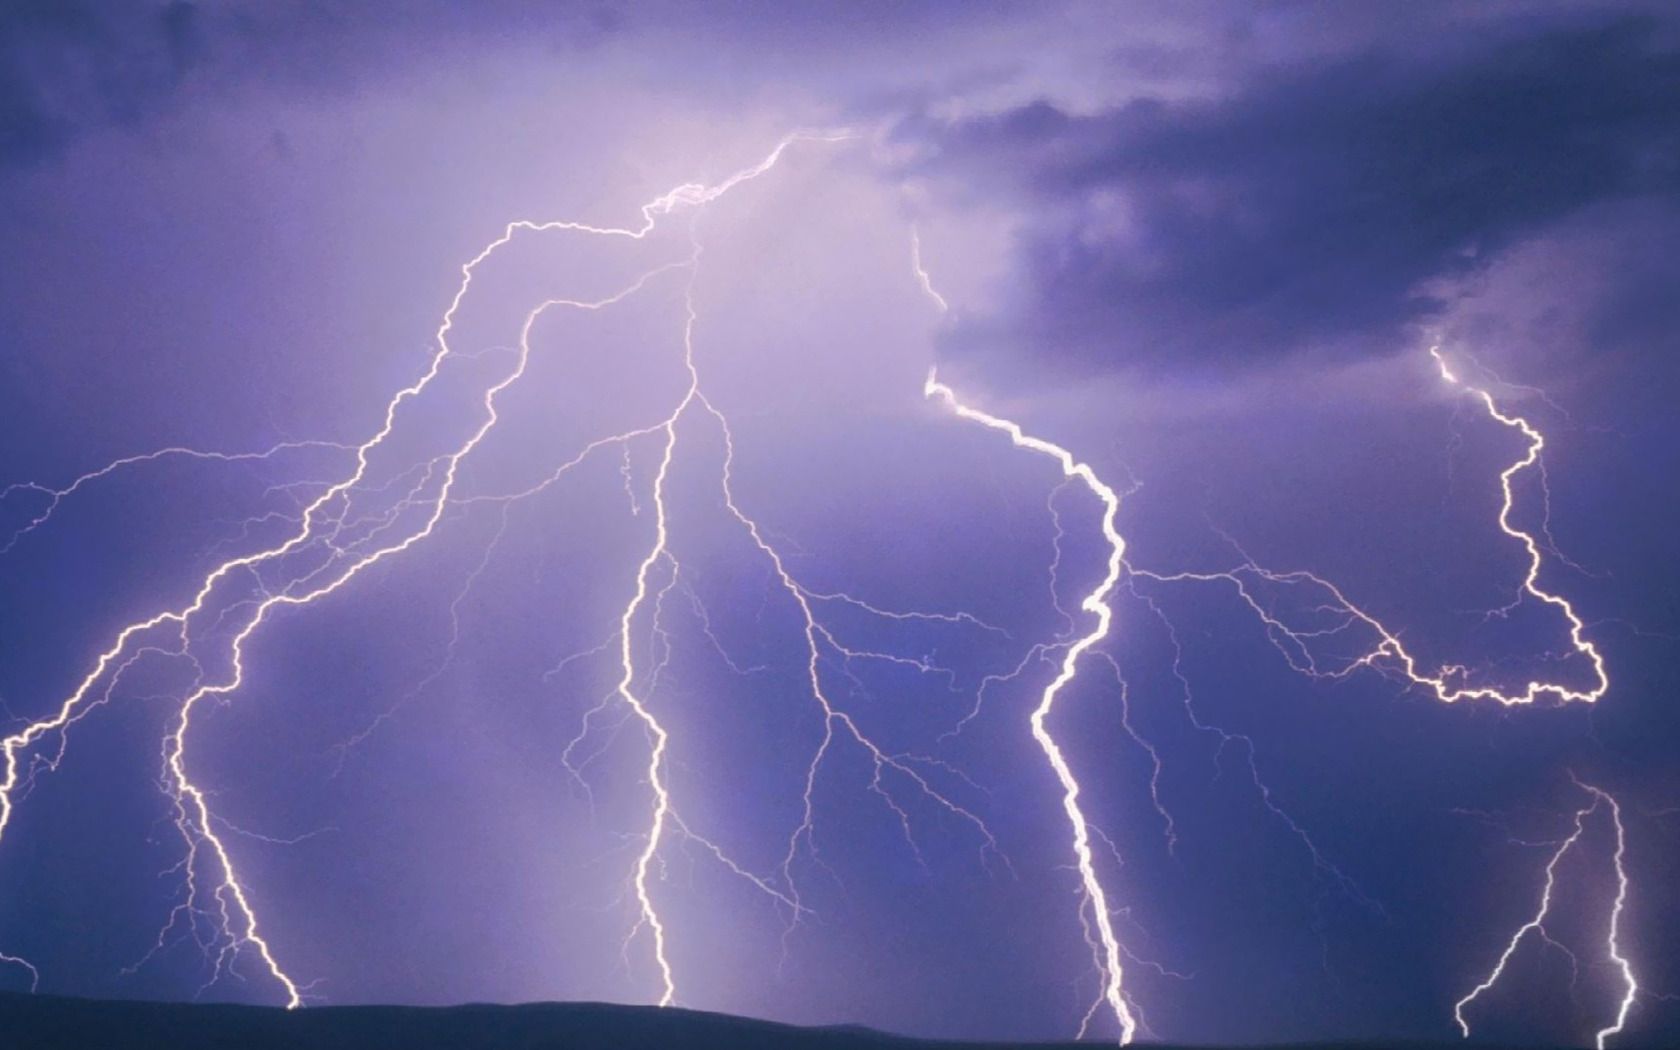 Multiple lightning bolts strike the ground in a purple sky. - Lightning